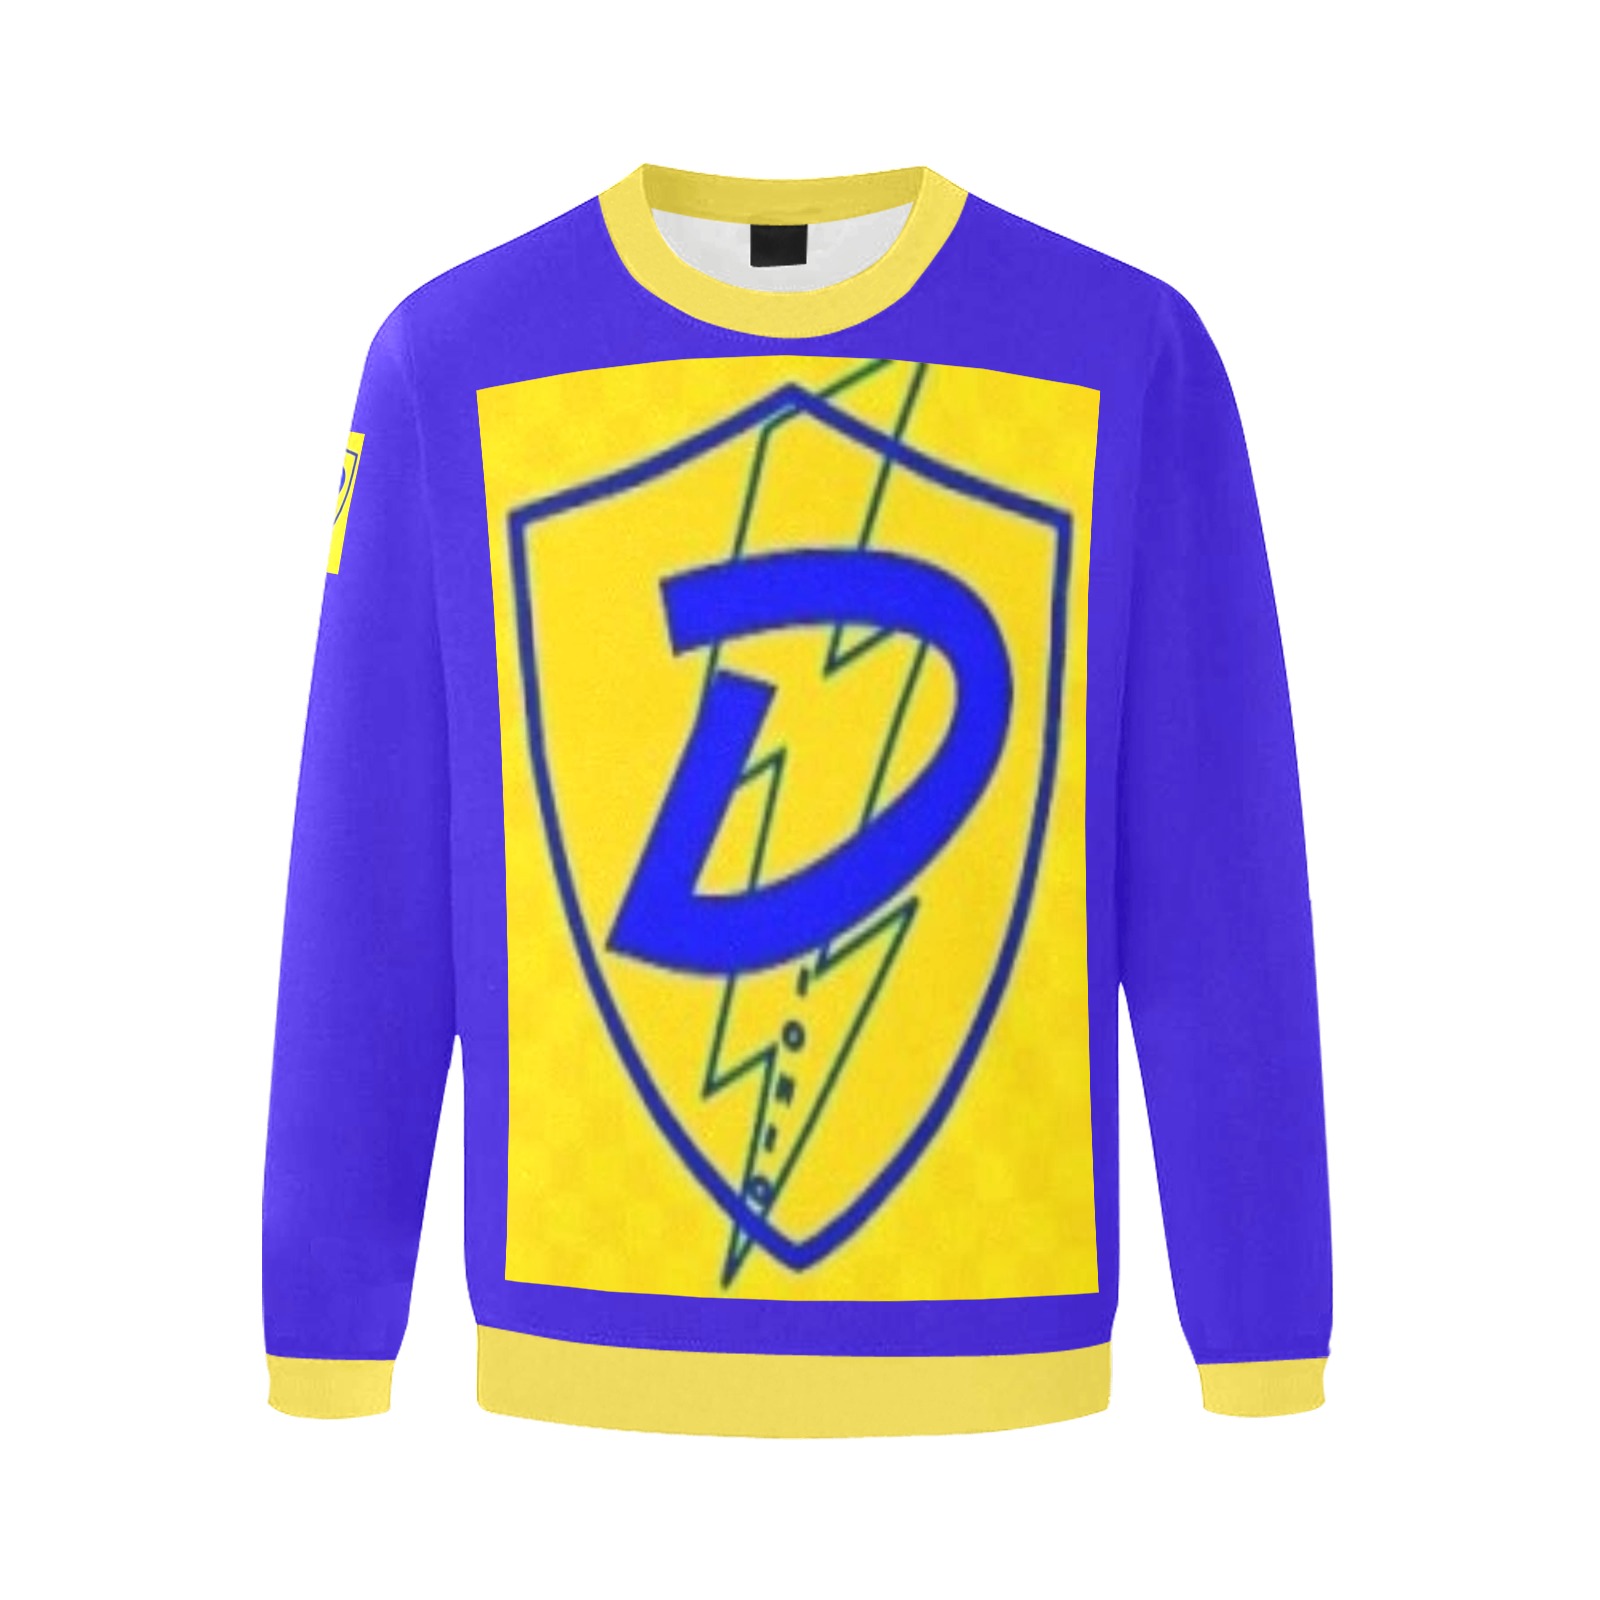 Dionio Clothing - Sweatshirt (Dark Blue & Yellow Shield Logo) Men's Oversized Fleece Crew Sweatshirt (Model H18)